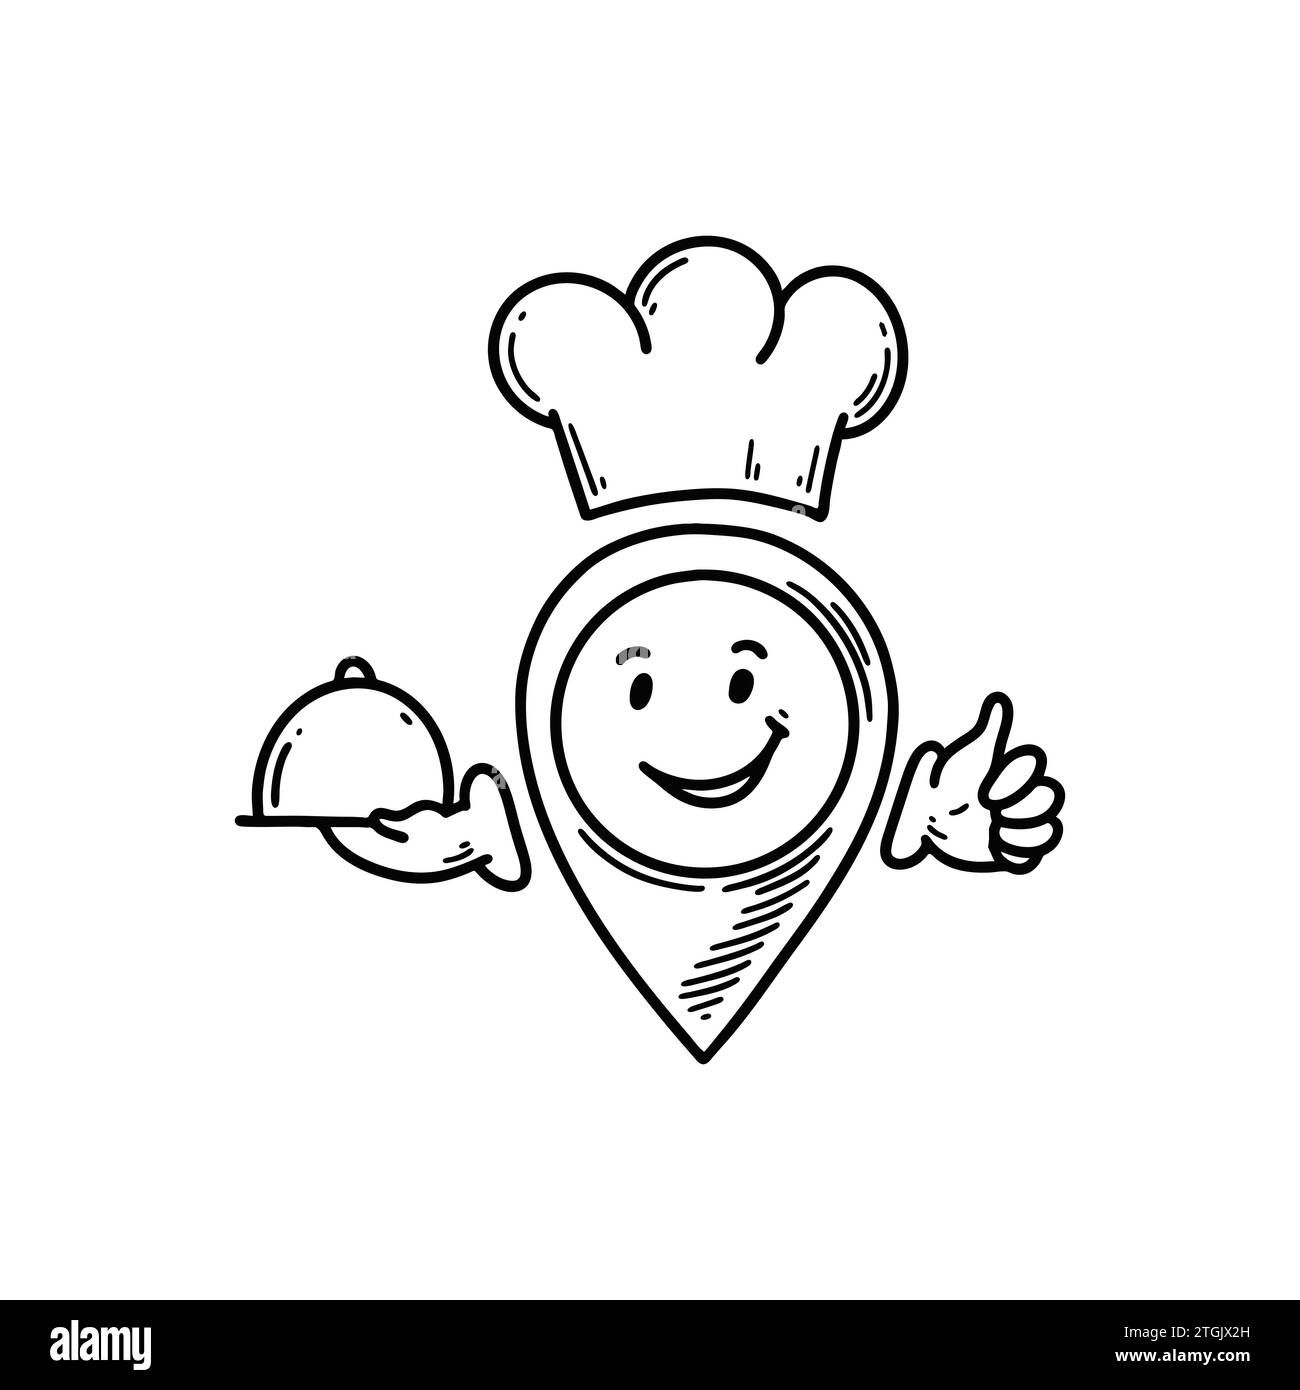 Niedliches Line Doodle Restaurant Lage Pin Emoji. Freihandskizze Pinpoint. Kartenadresse Comic Emoticon. Lächelnder lustiger Charakter Stock Vektor